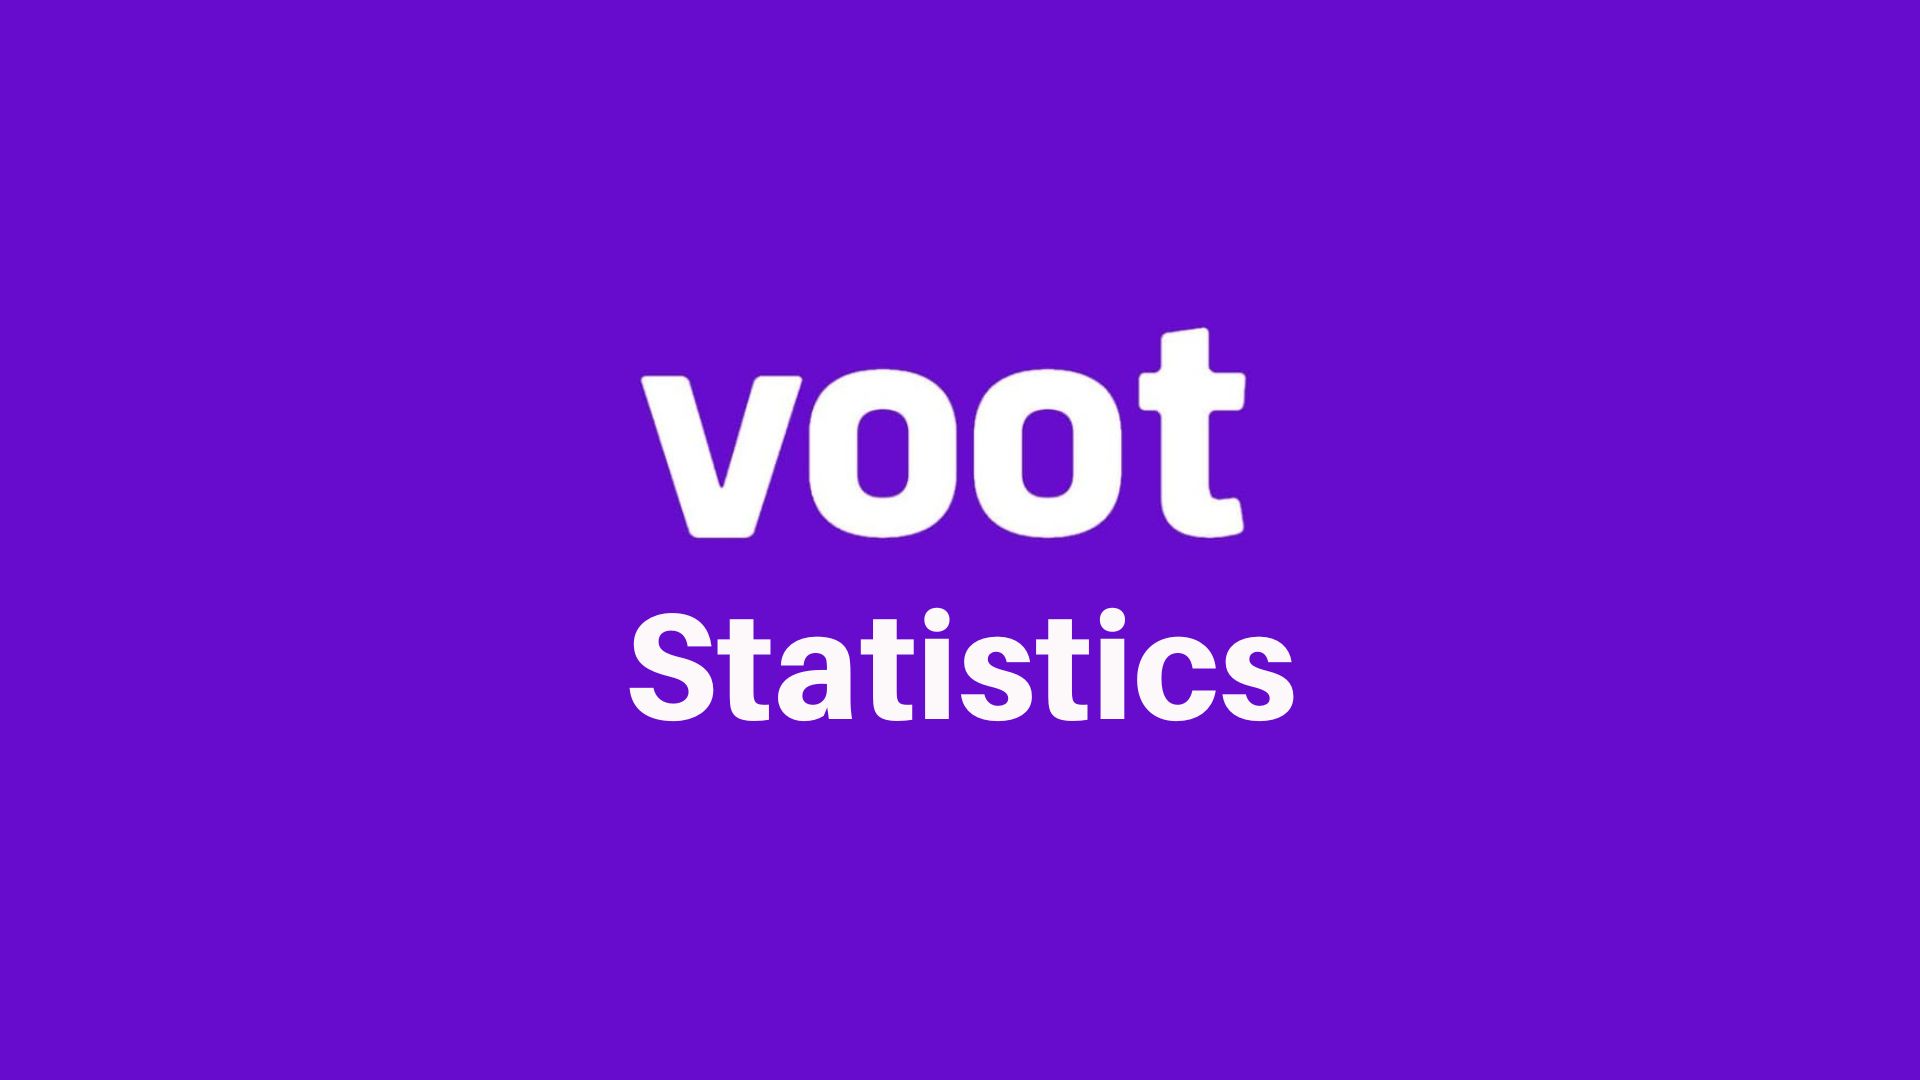 Voot Statistics By Region, Demographic, Referral and Traffic